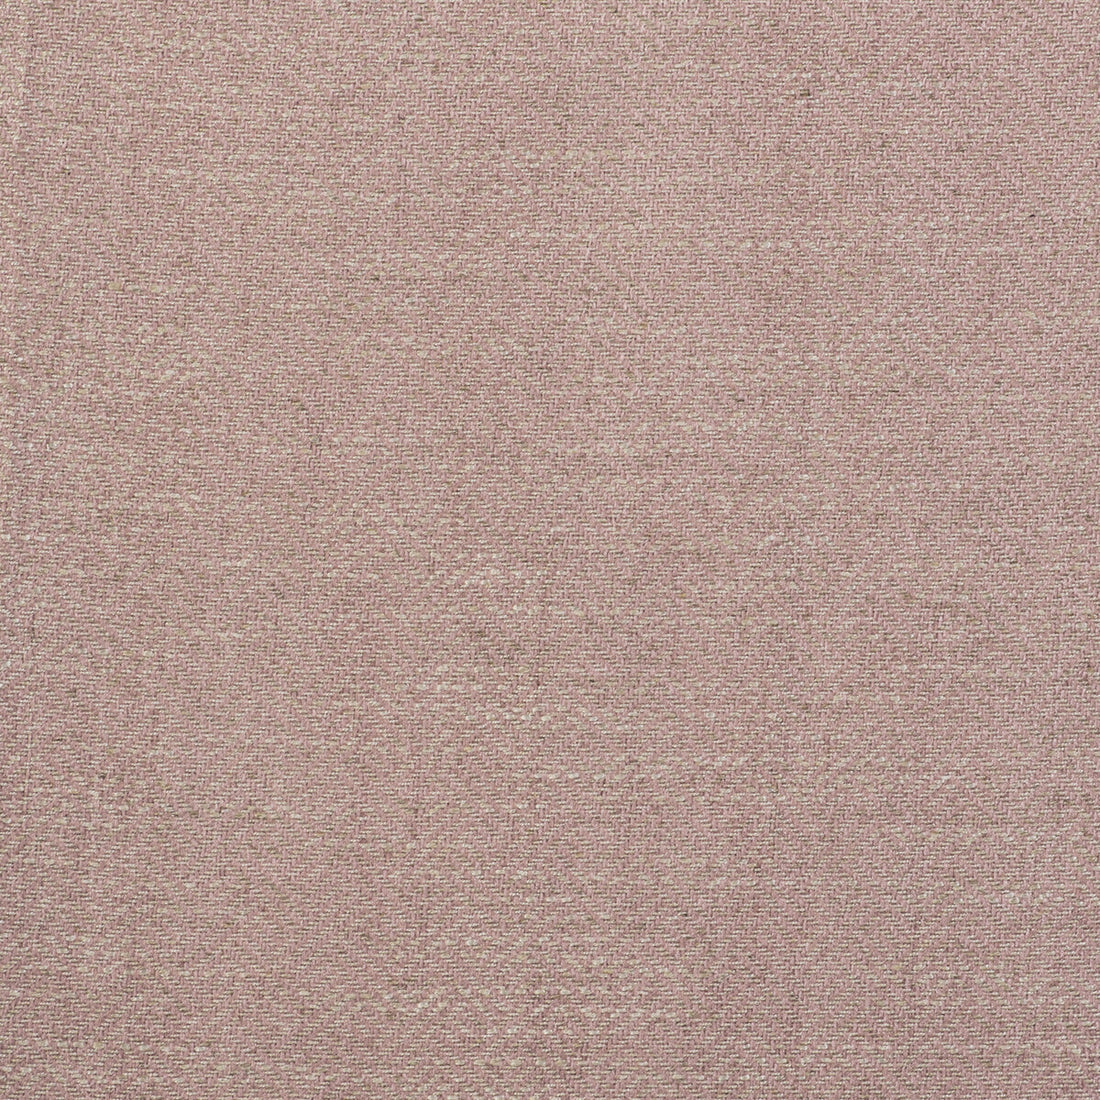 Enea fabric in rosa color - pattern GDT5518.012.0 - by Gaston y Daniela in the Gaston Libreria collection